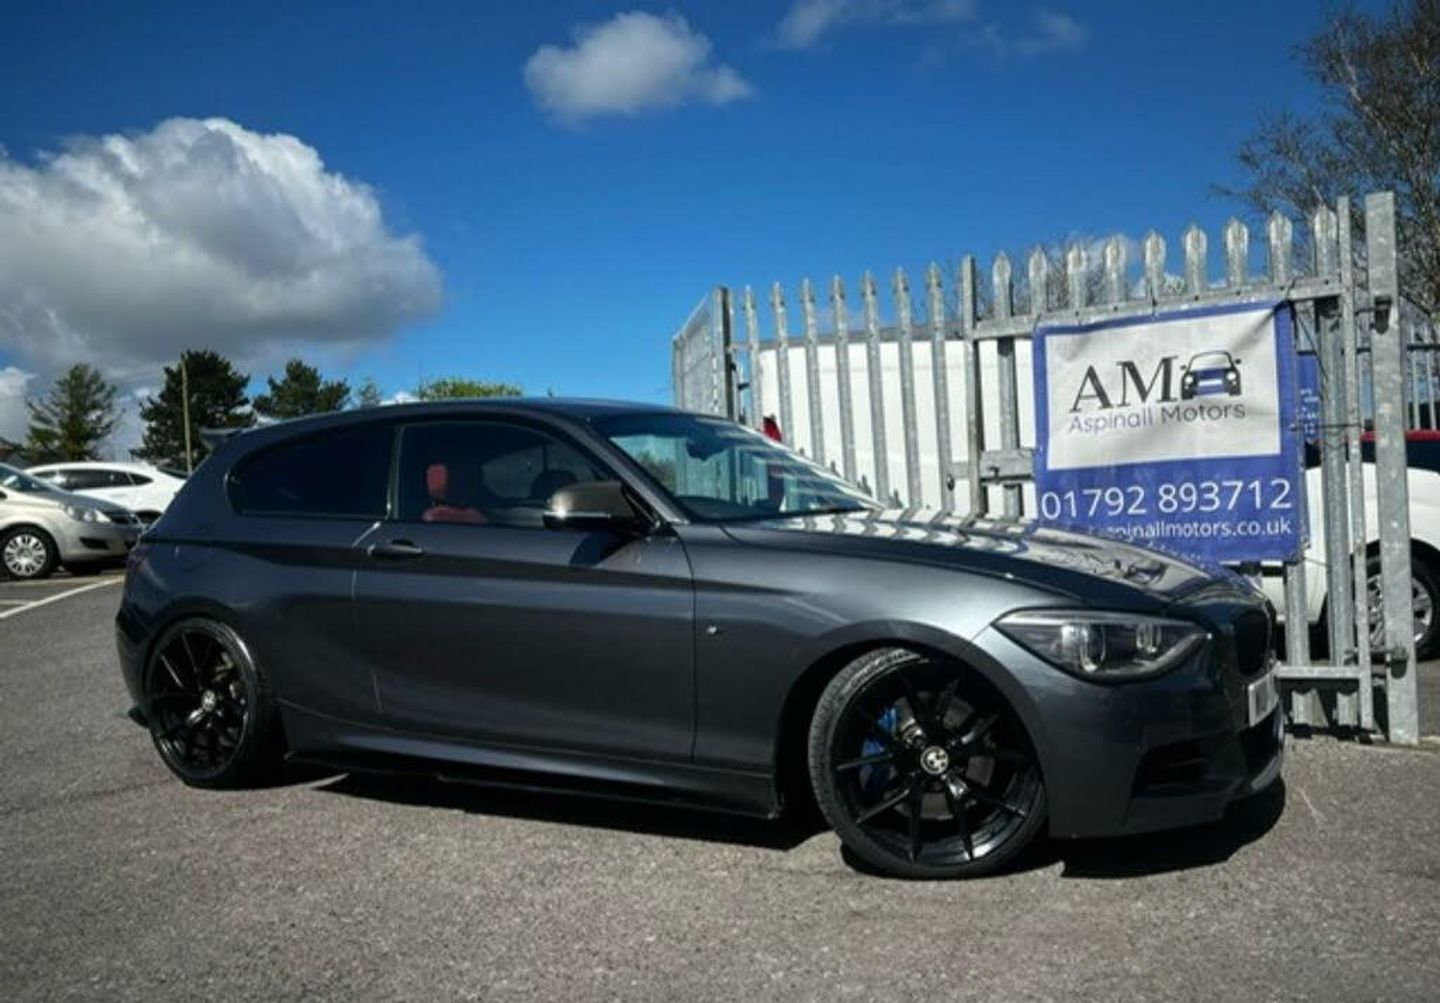 2014 BMW 1 SERIES